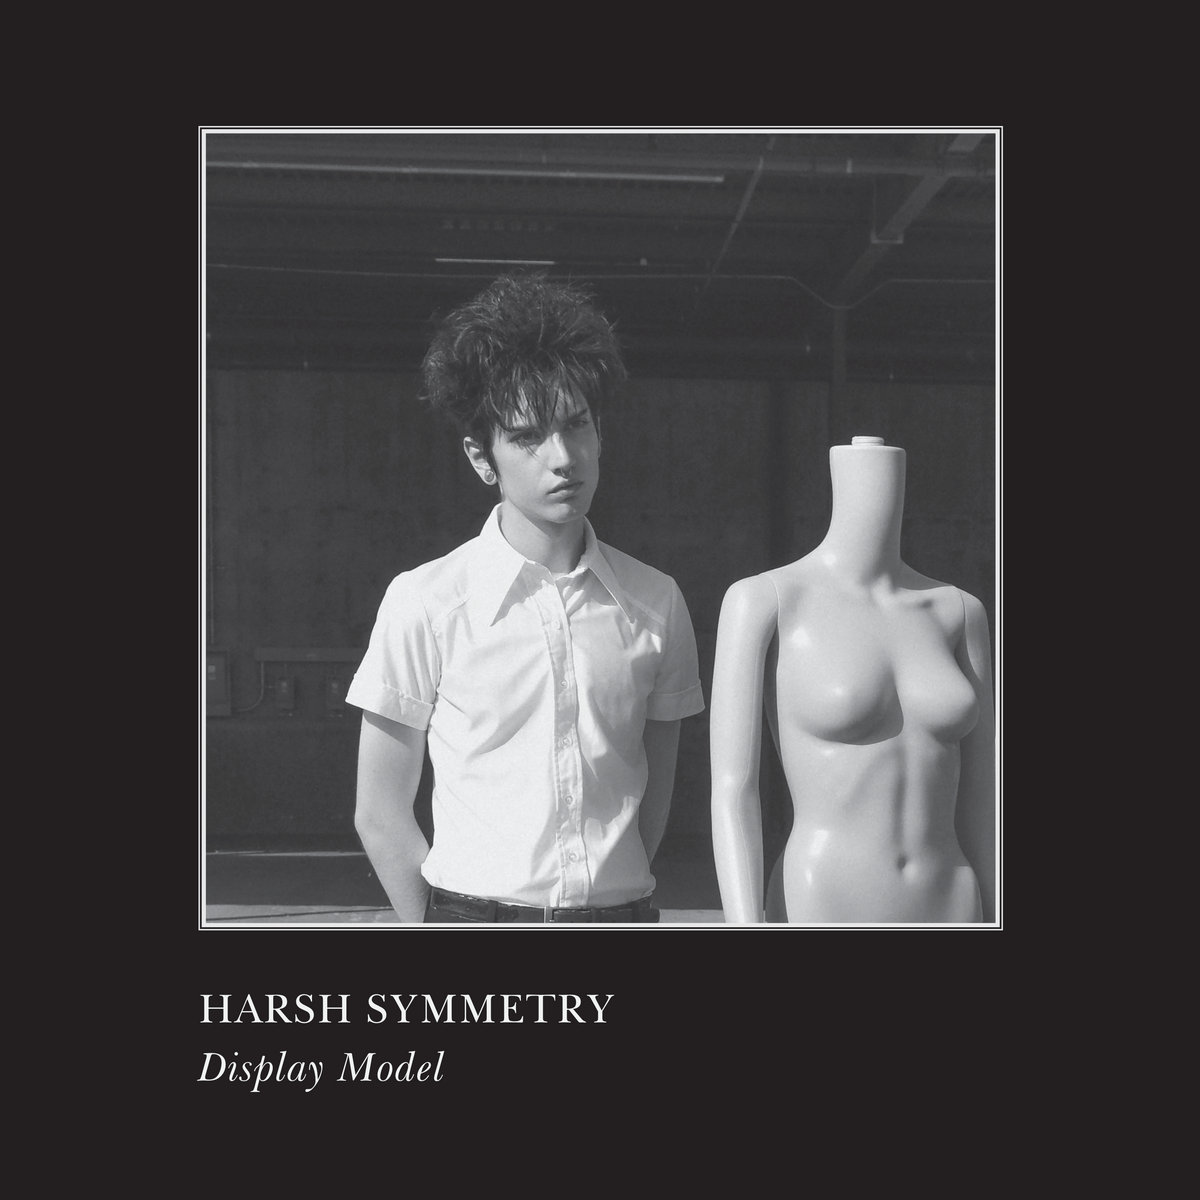 Harsh Symmetry, “Display Model”